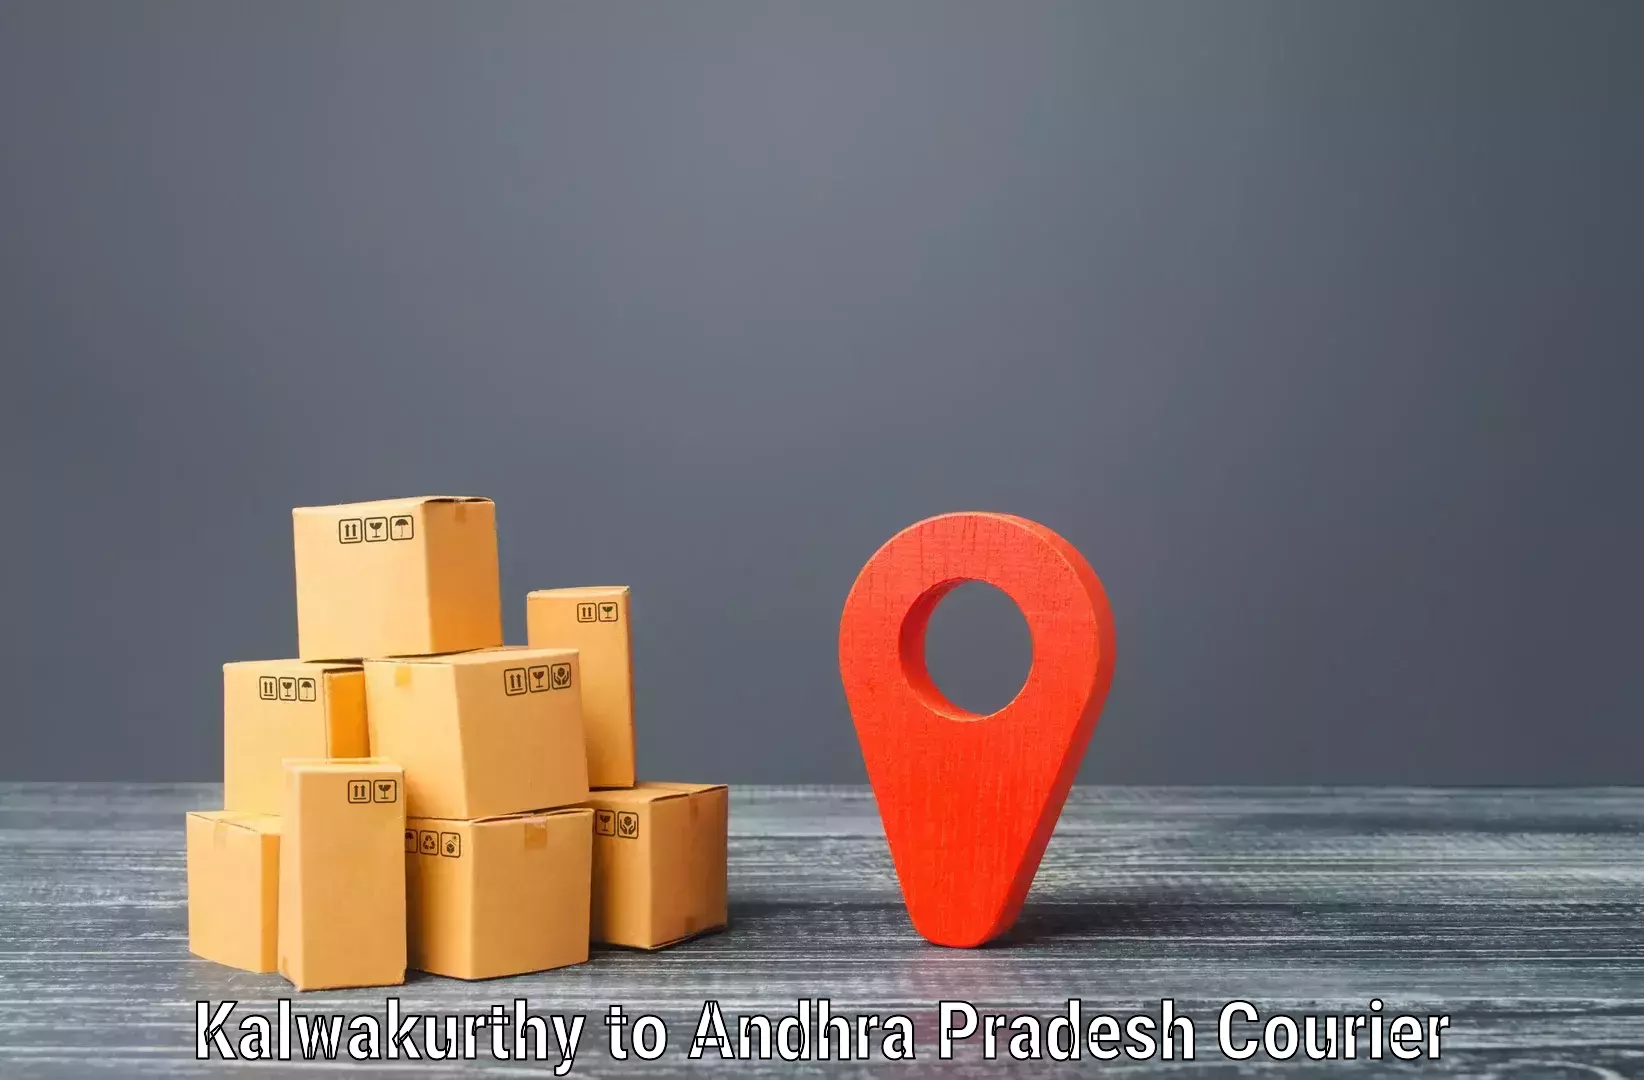 Premium courier solutions Kalwakurthy to Andhra Pradesh